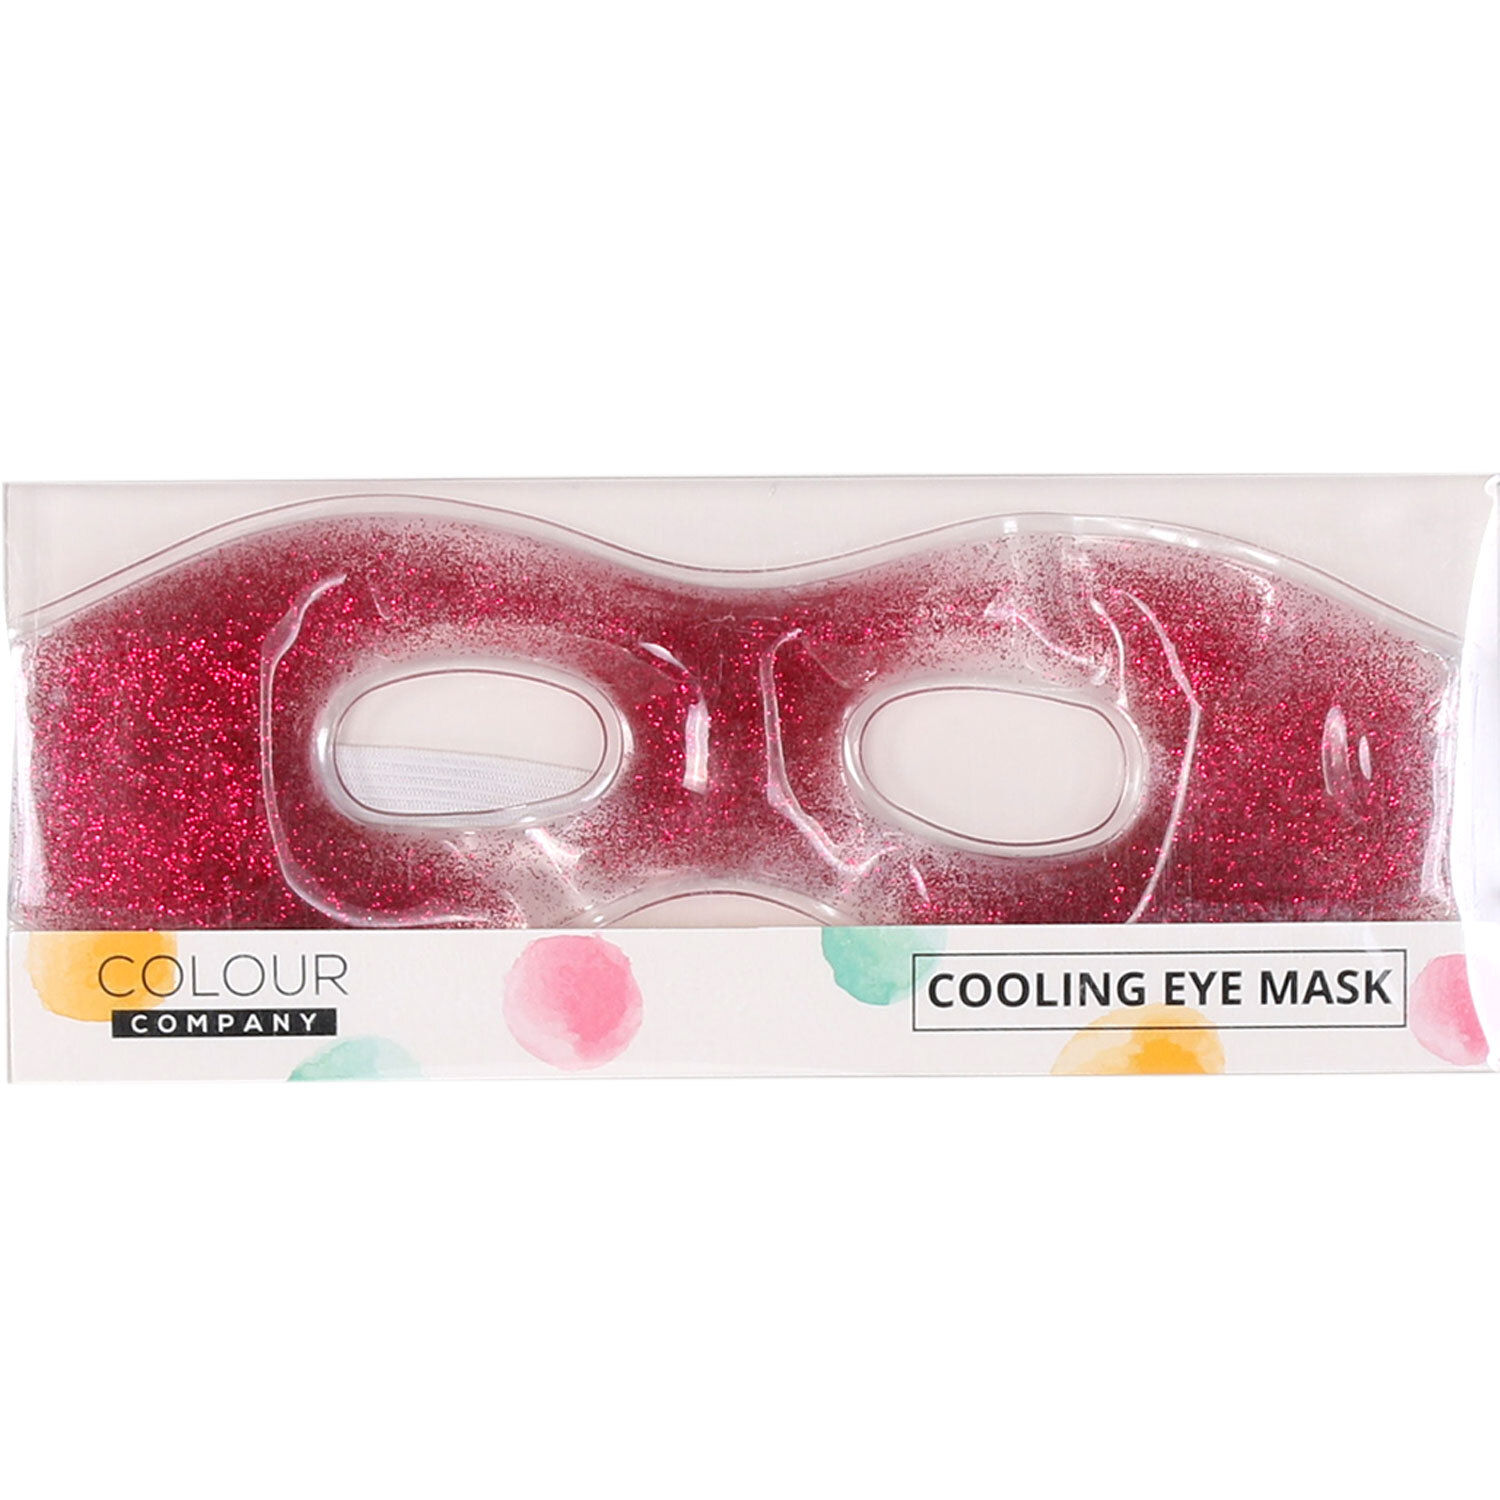 Colour Company Cooling Eye Mask Image 2